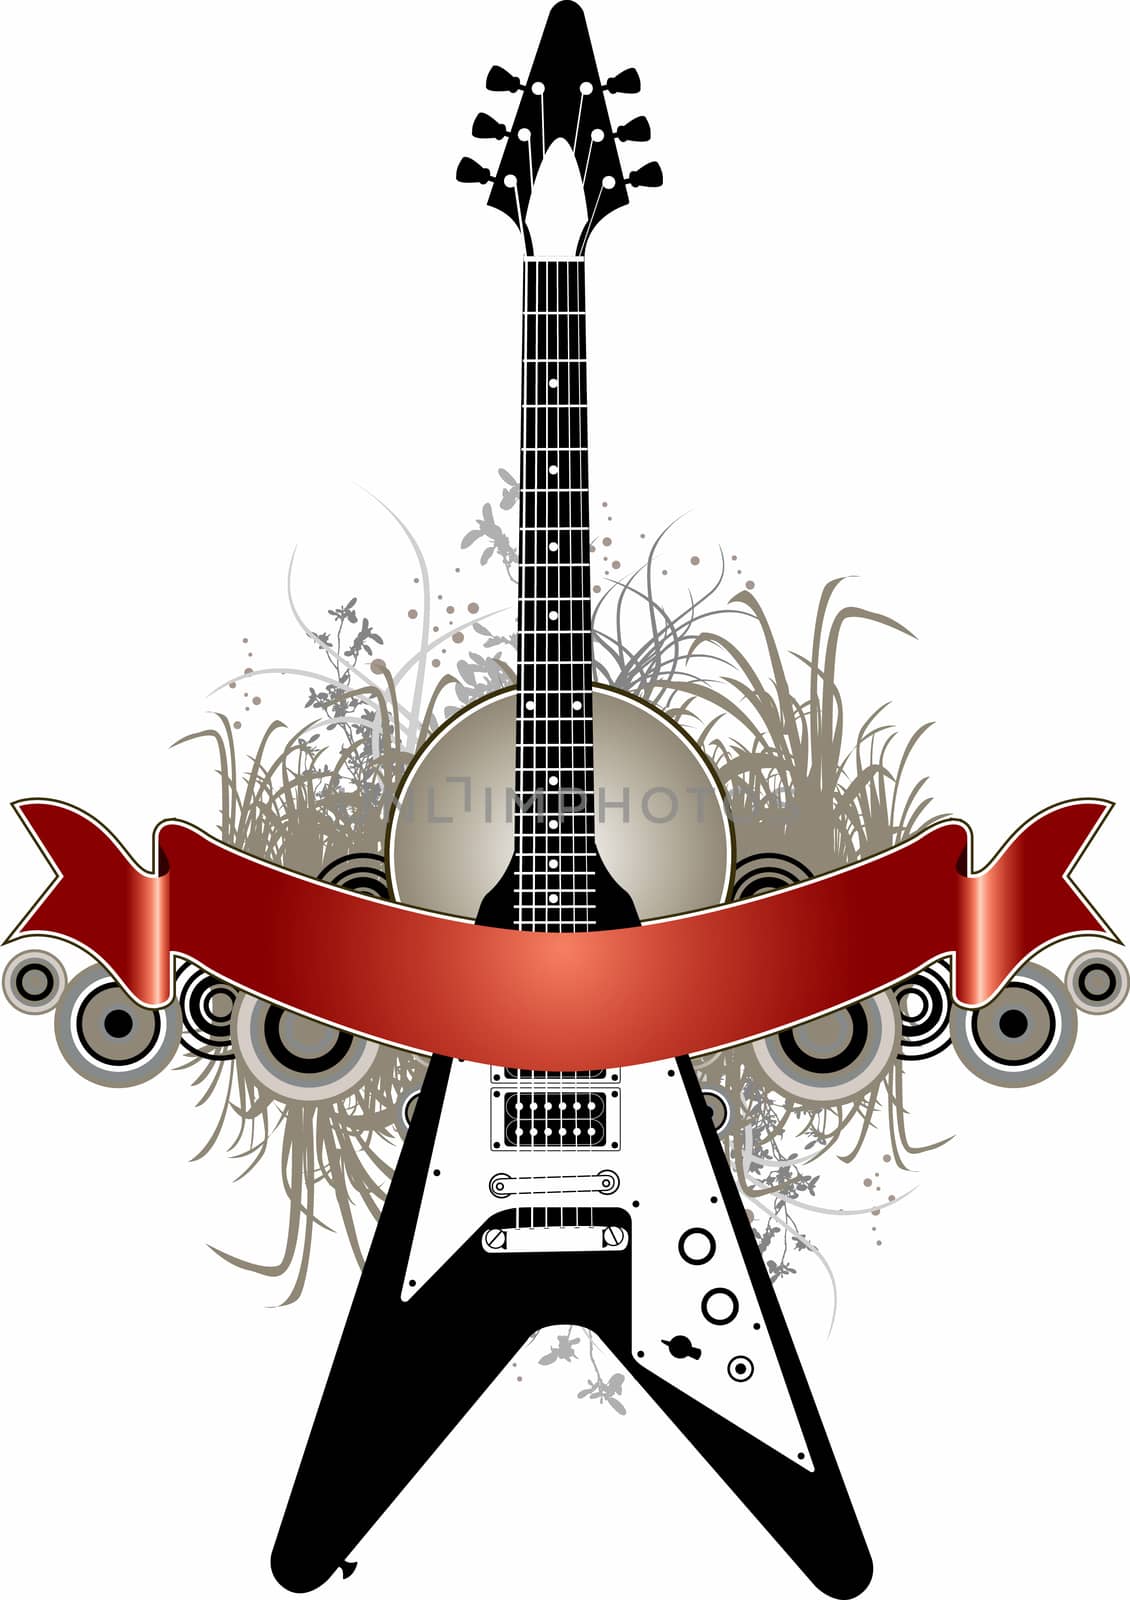 Guitar Vector Banner Design template